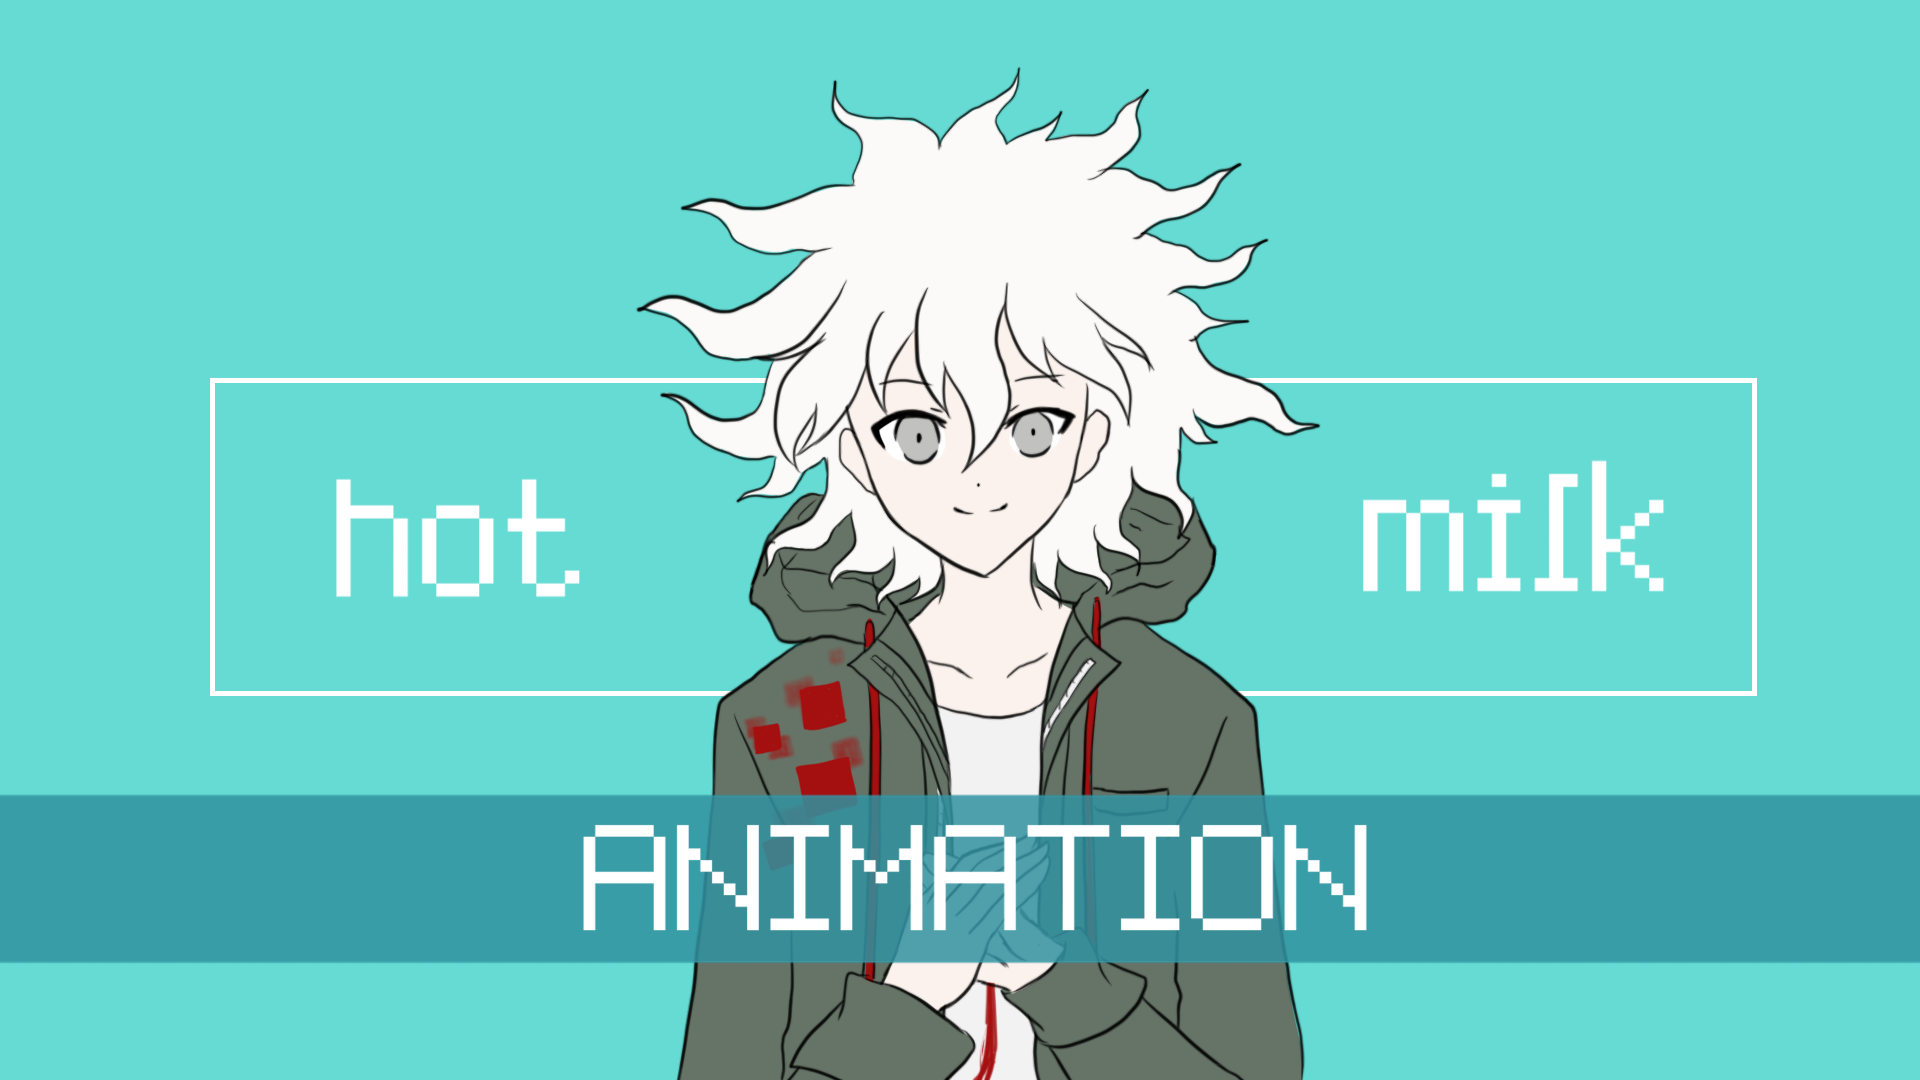 Hot Milk Animation Meme - Nagito Komaeda by Astrovique on DeviantArt